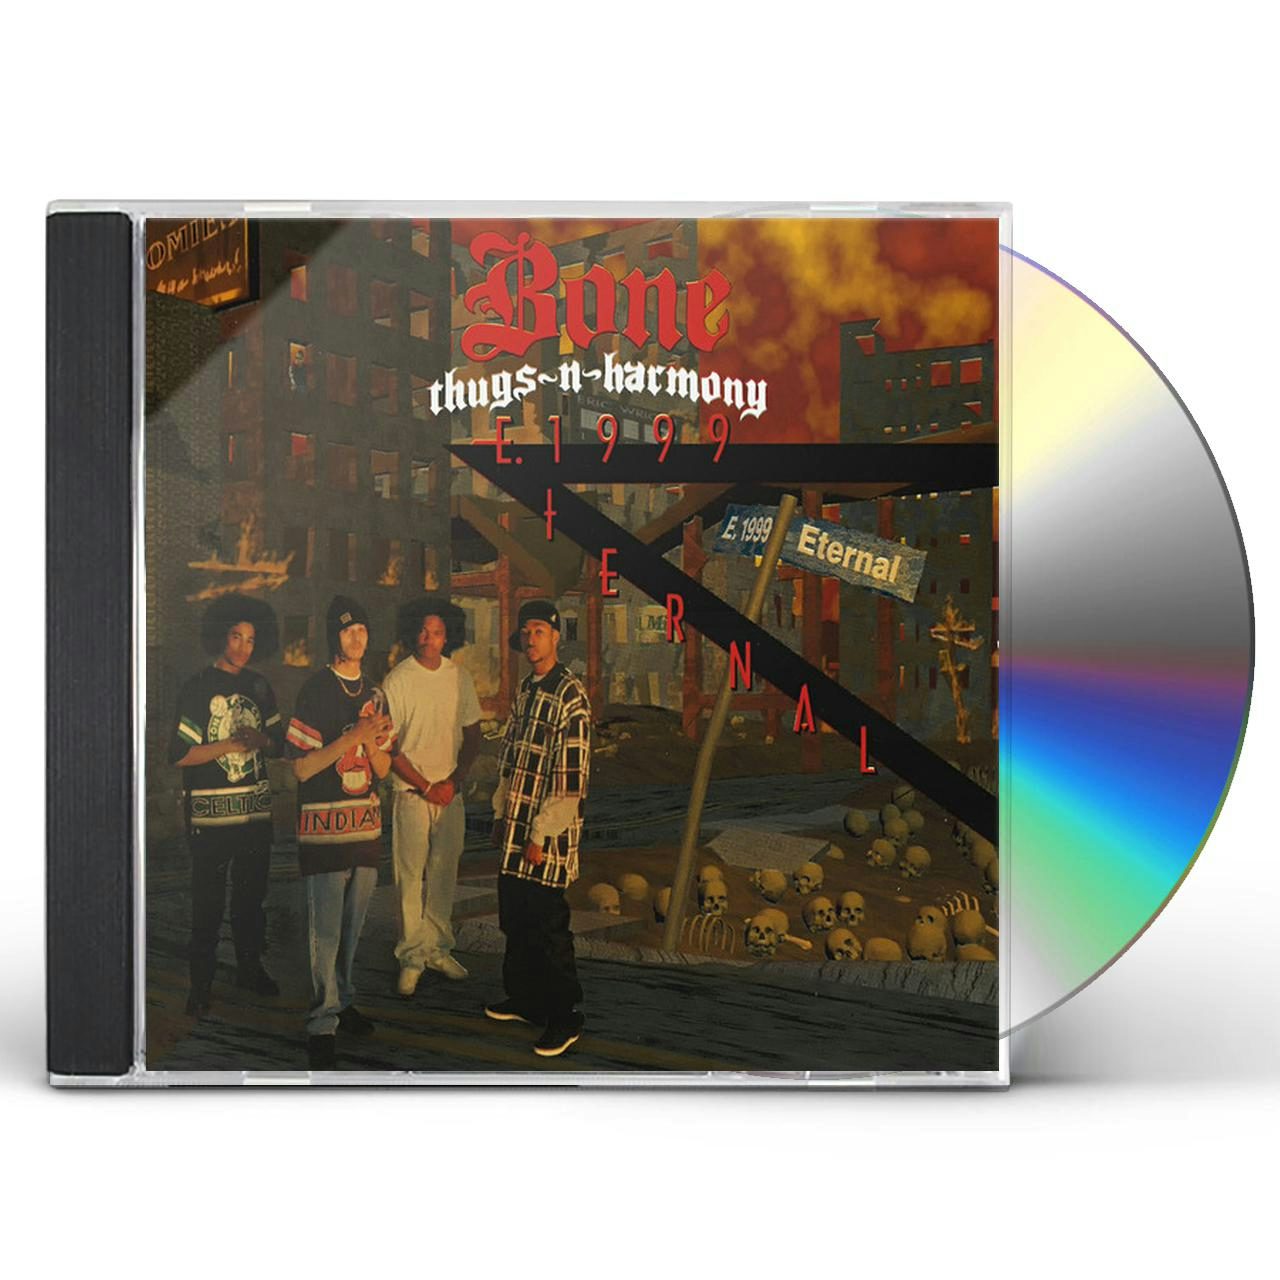 Bone Thugs-N-Harmony E. 1999 ETERNAL CD